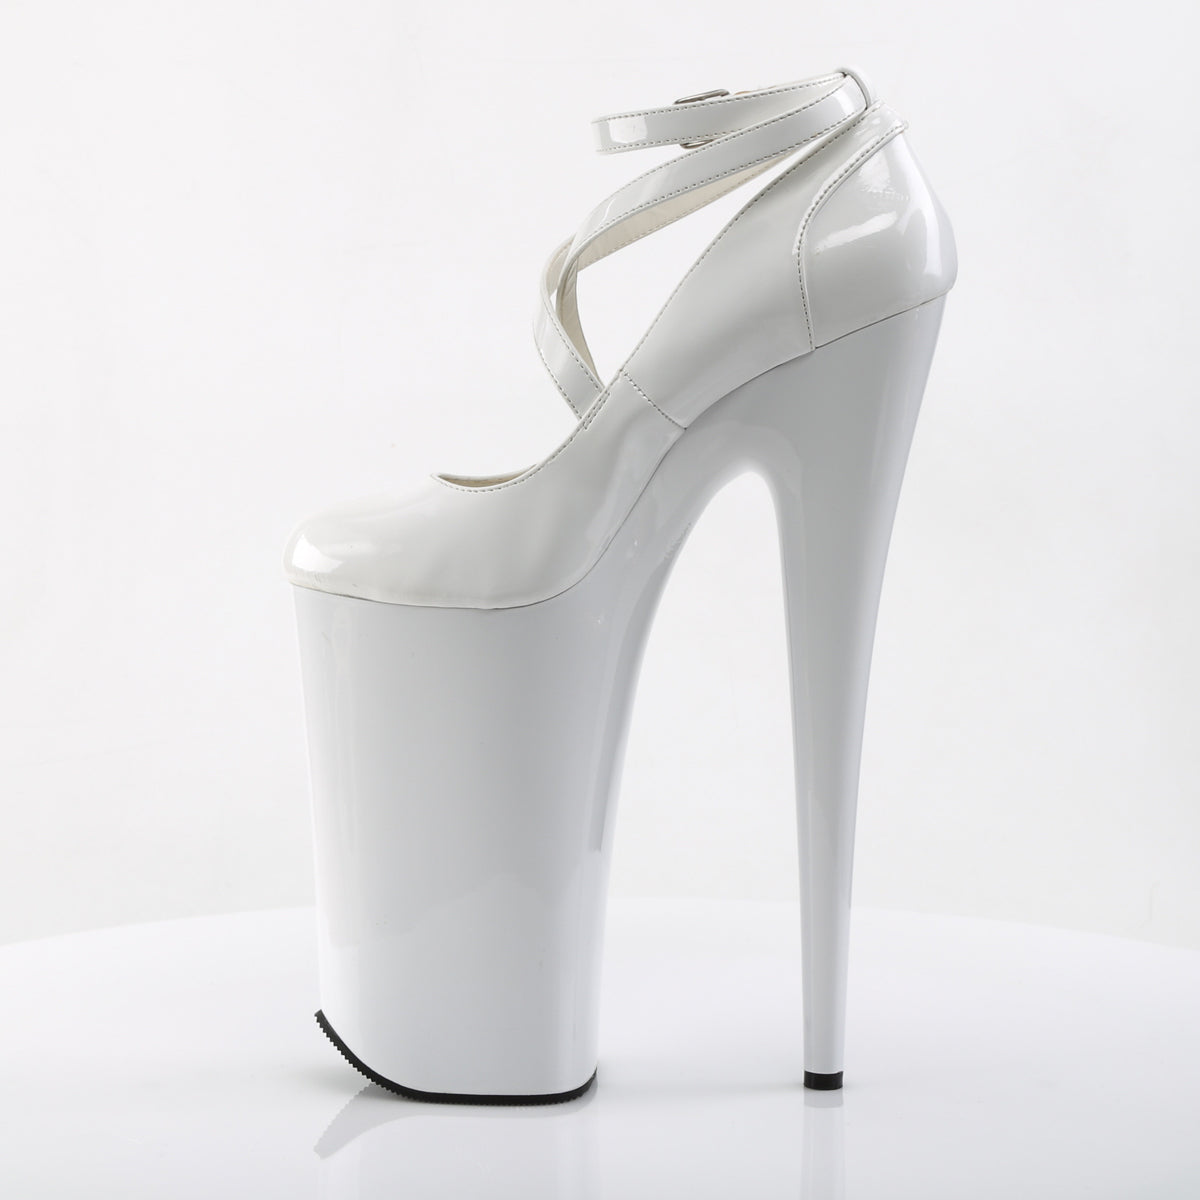 BEYOND-087 Pleaser White/White Platform Shoes [Extreme High Heels]